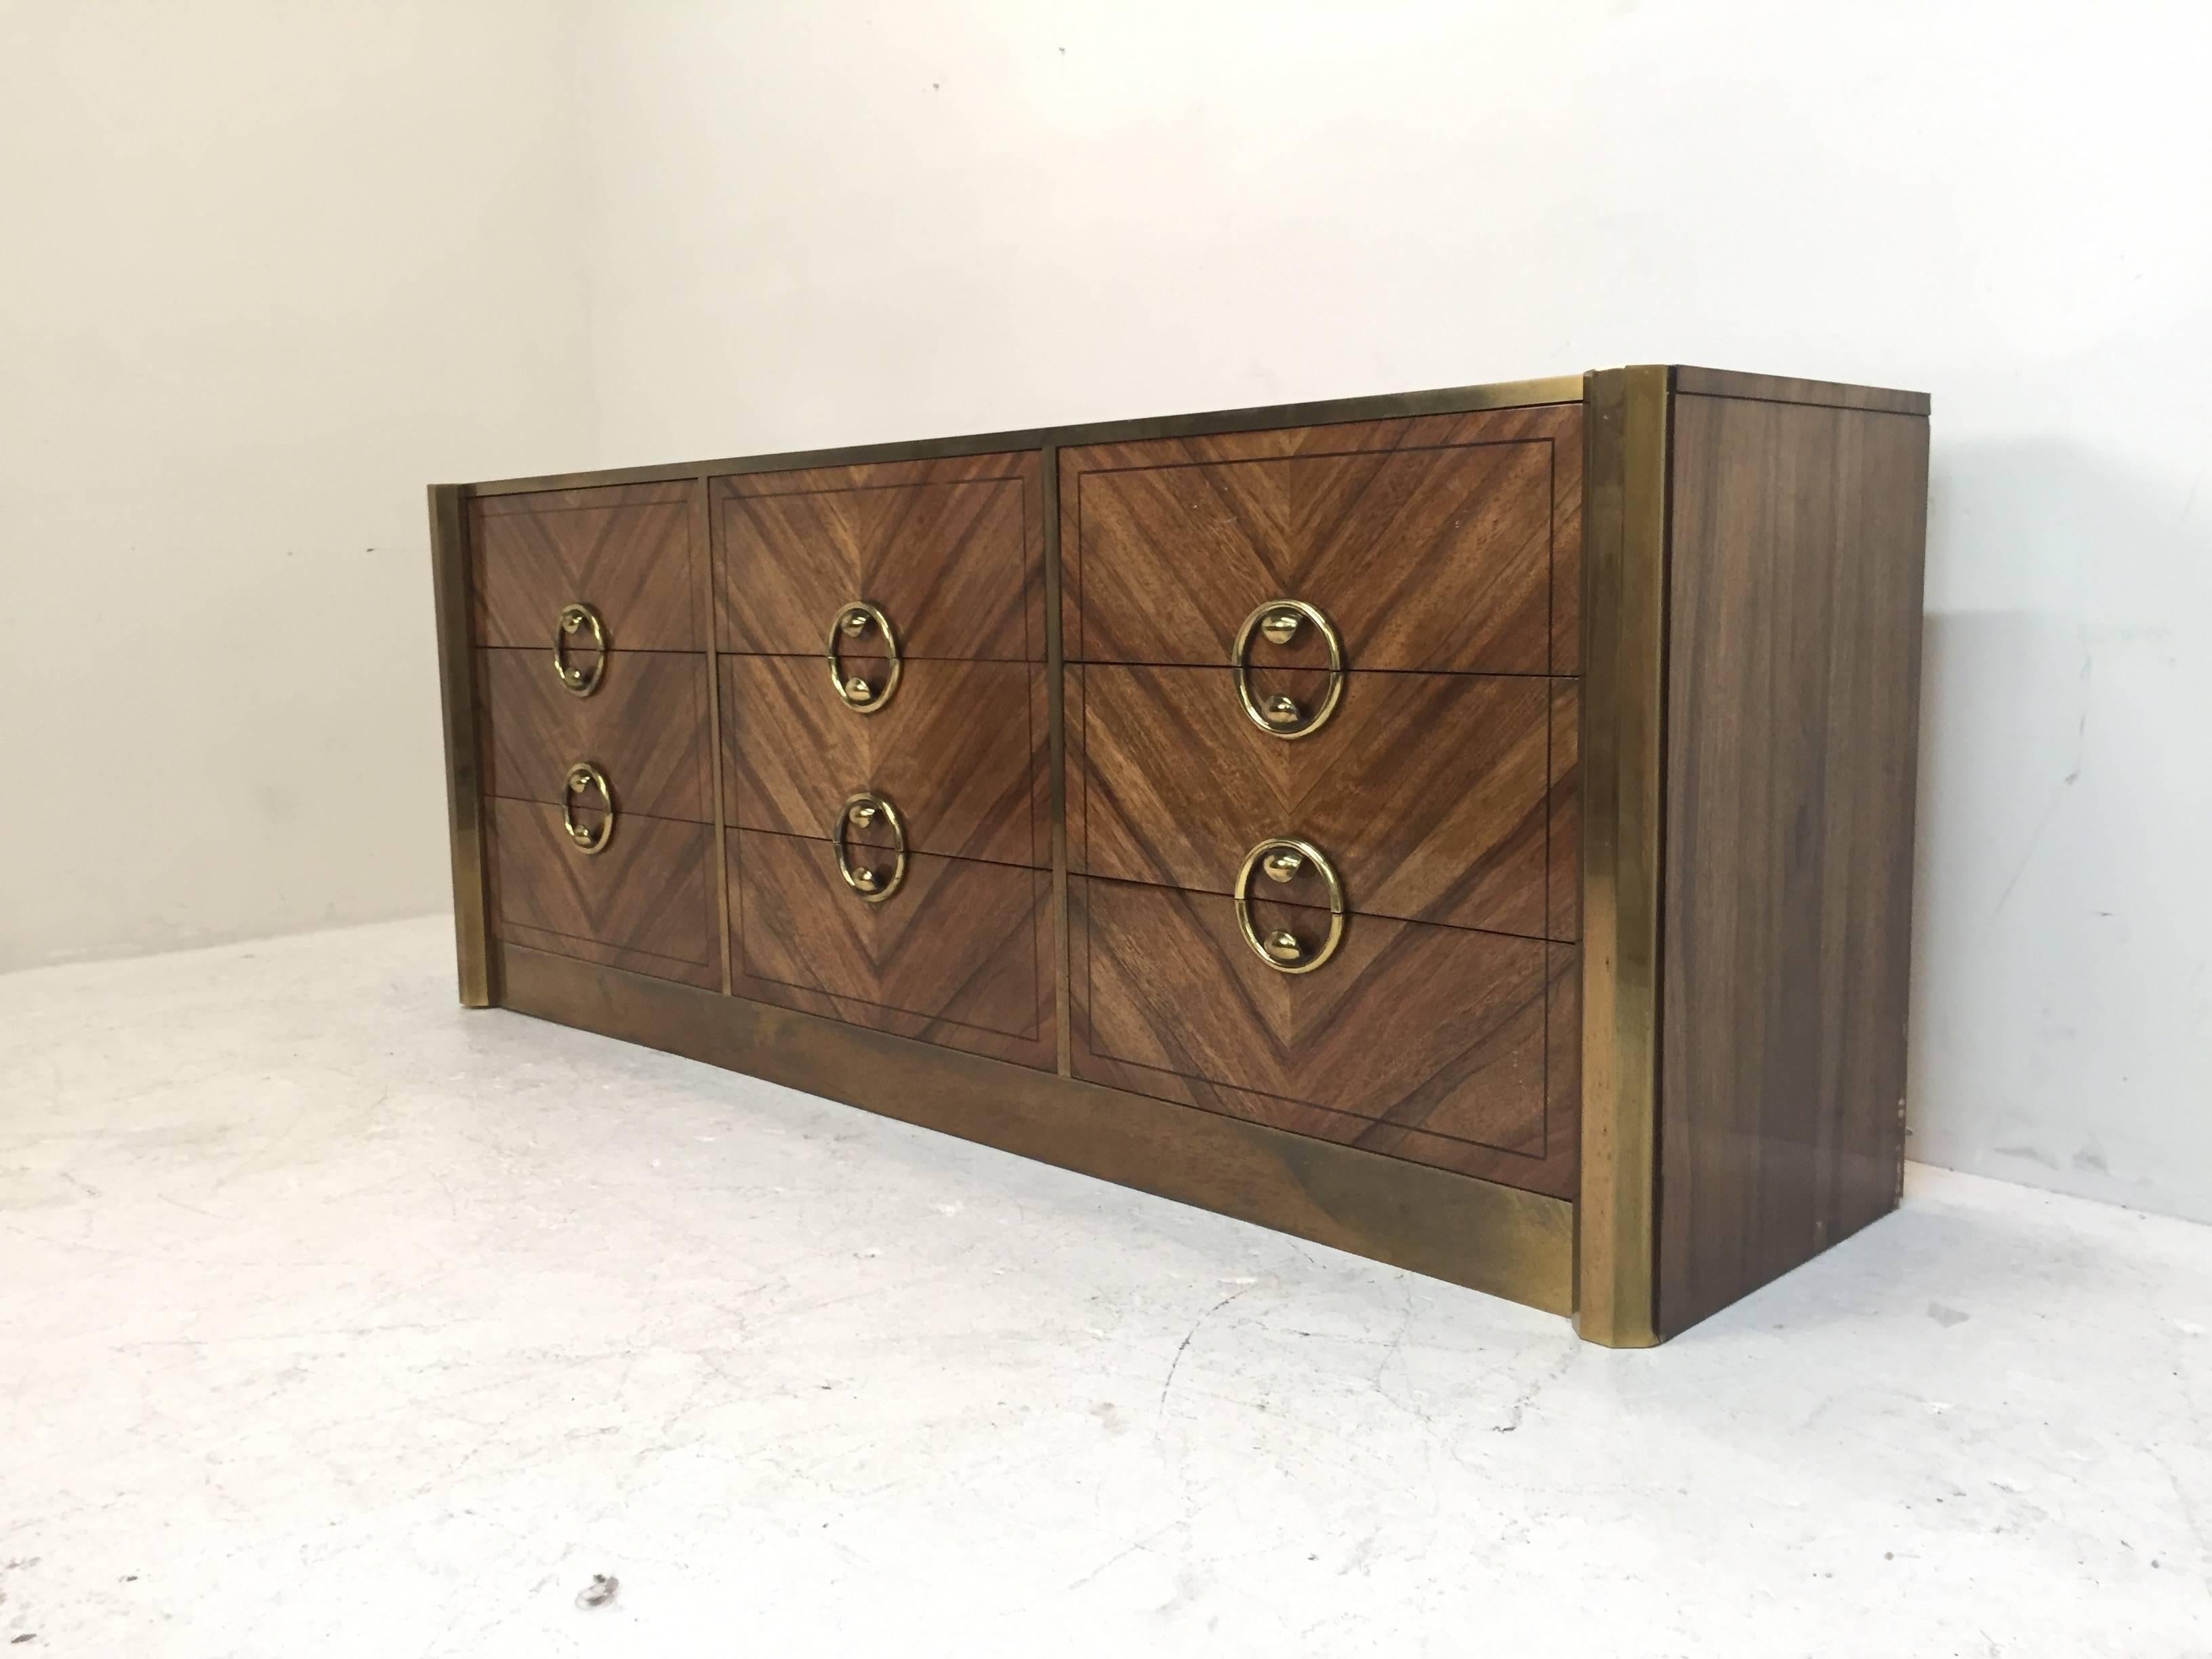 Mastercraft nine-drawer dresser with beautiful zebrano wood.